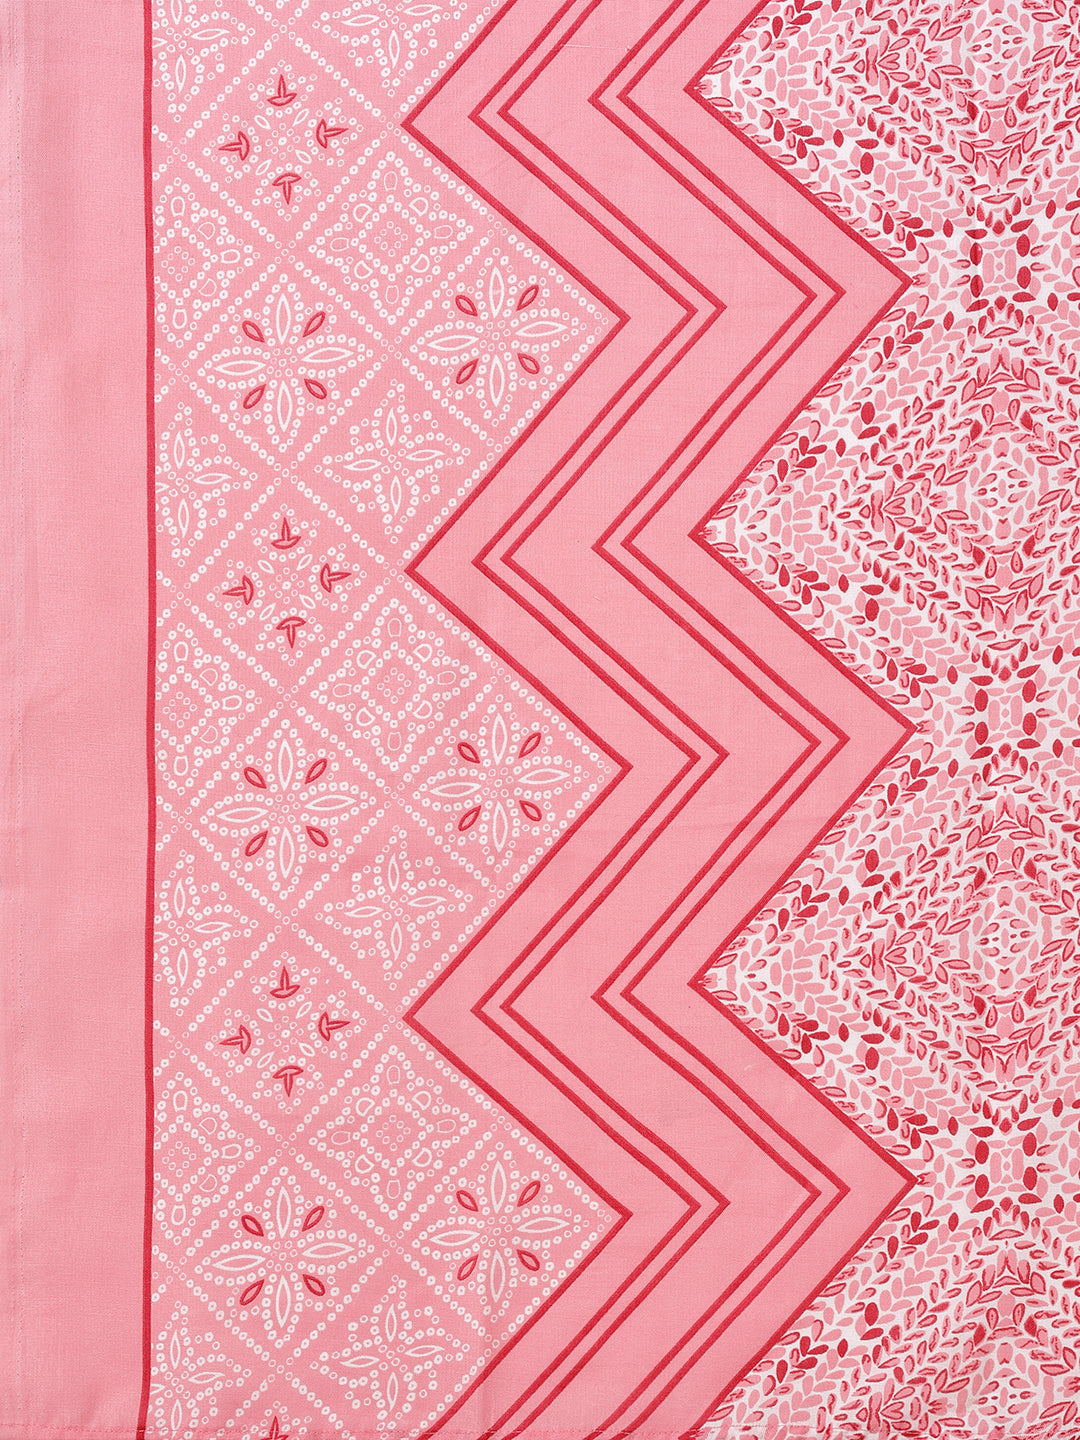 Cotton blend foil print kurta set with dupatta